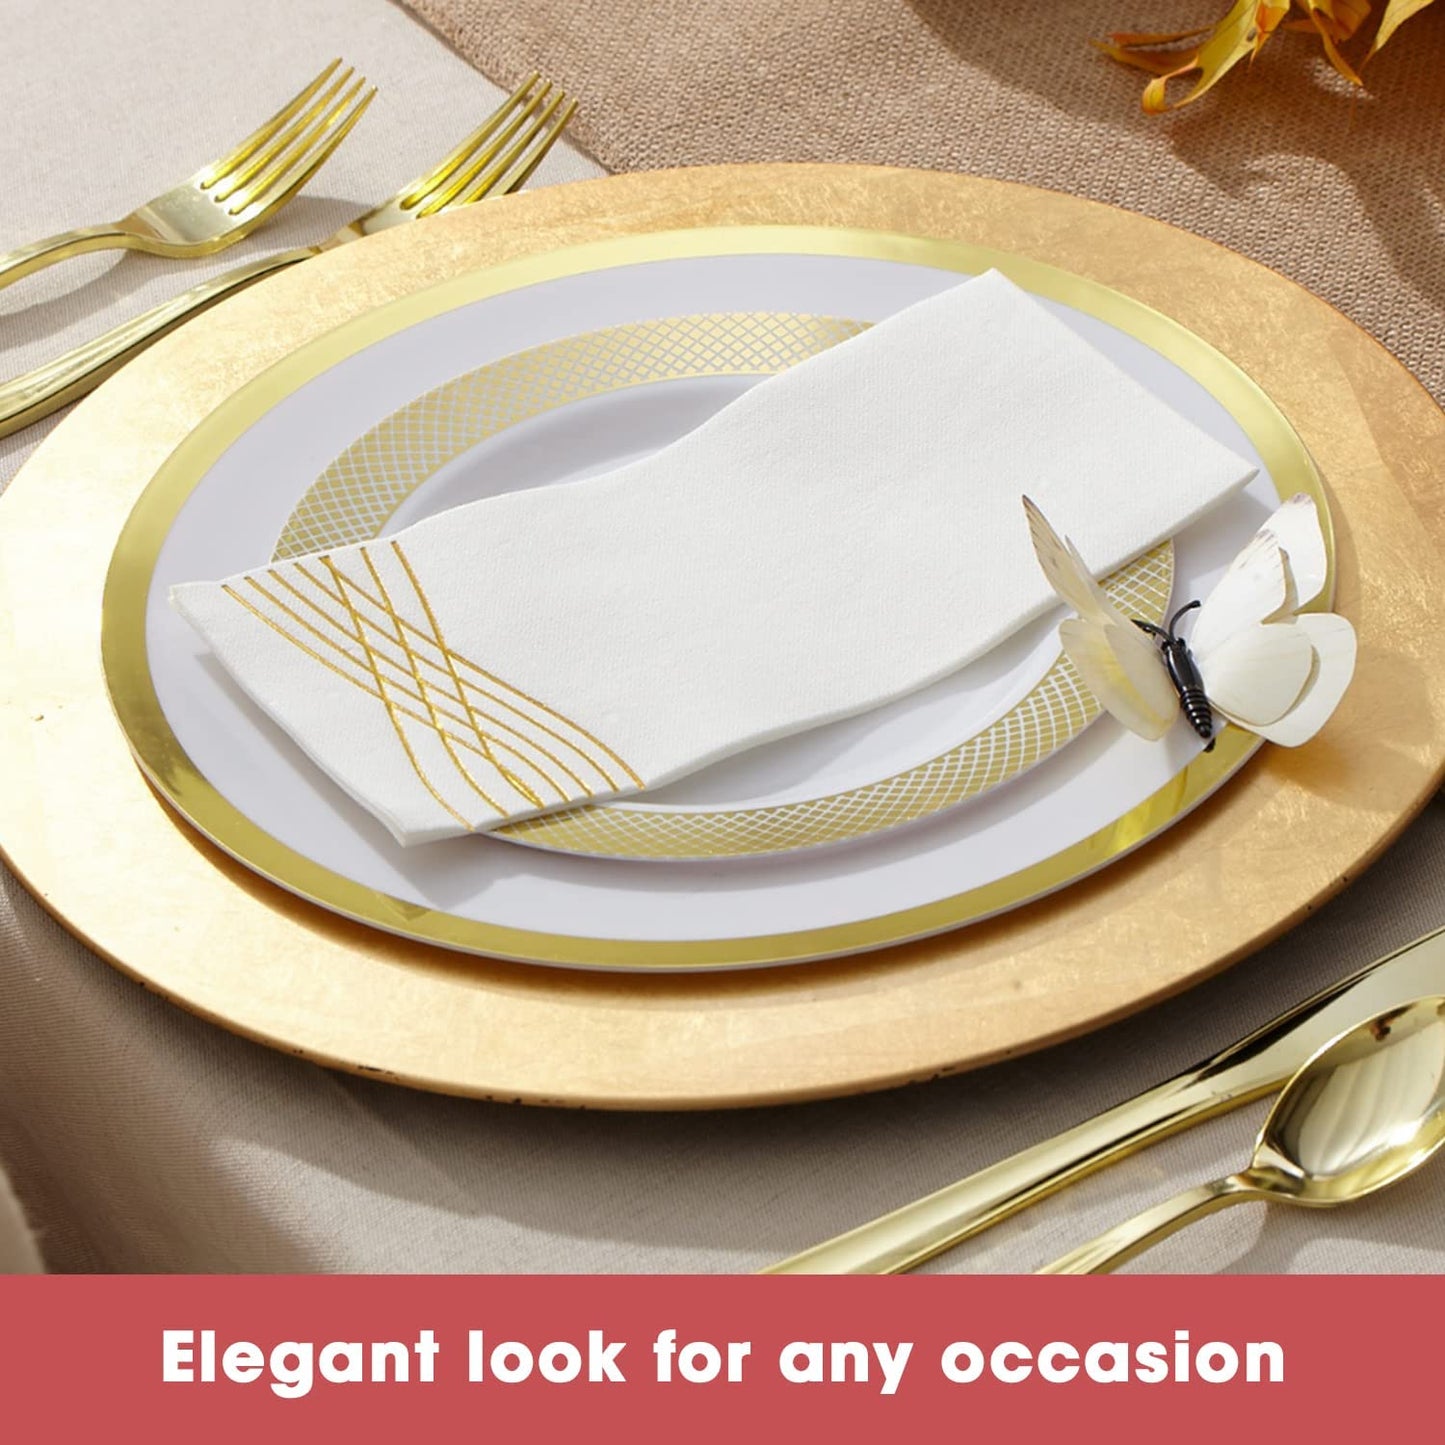 60 PCS Gold Plastic Plates - 30 Dinner Plates & 30 Salad or Dessert Plates